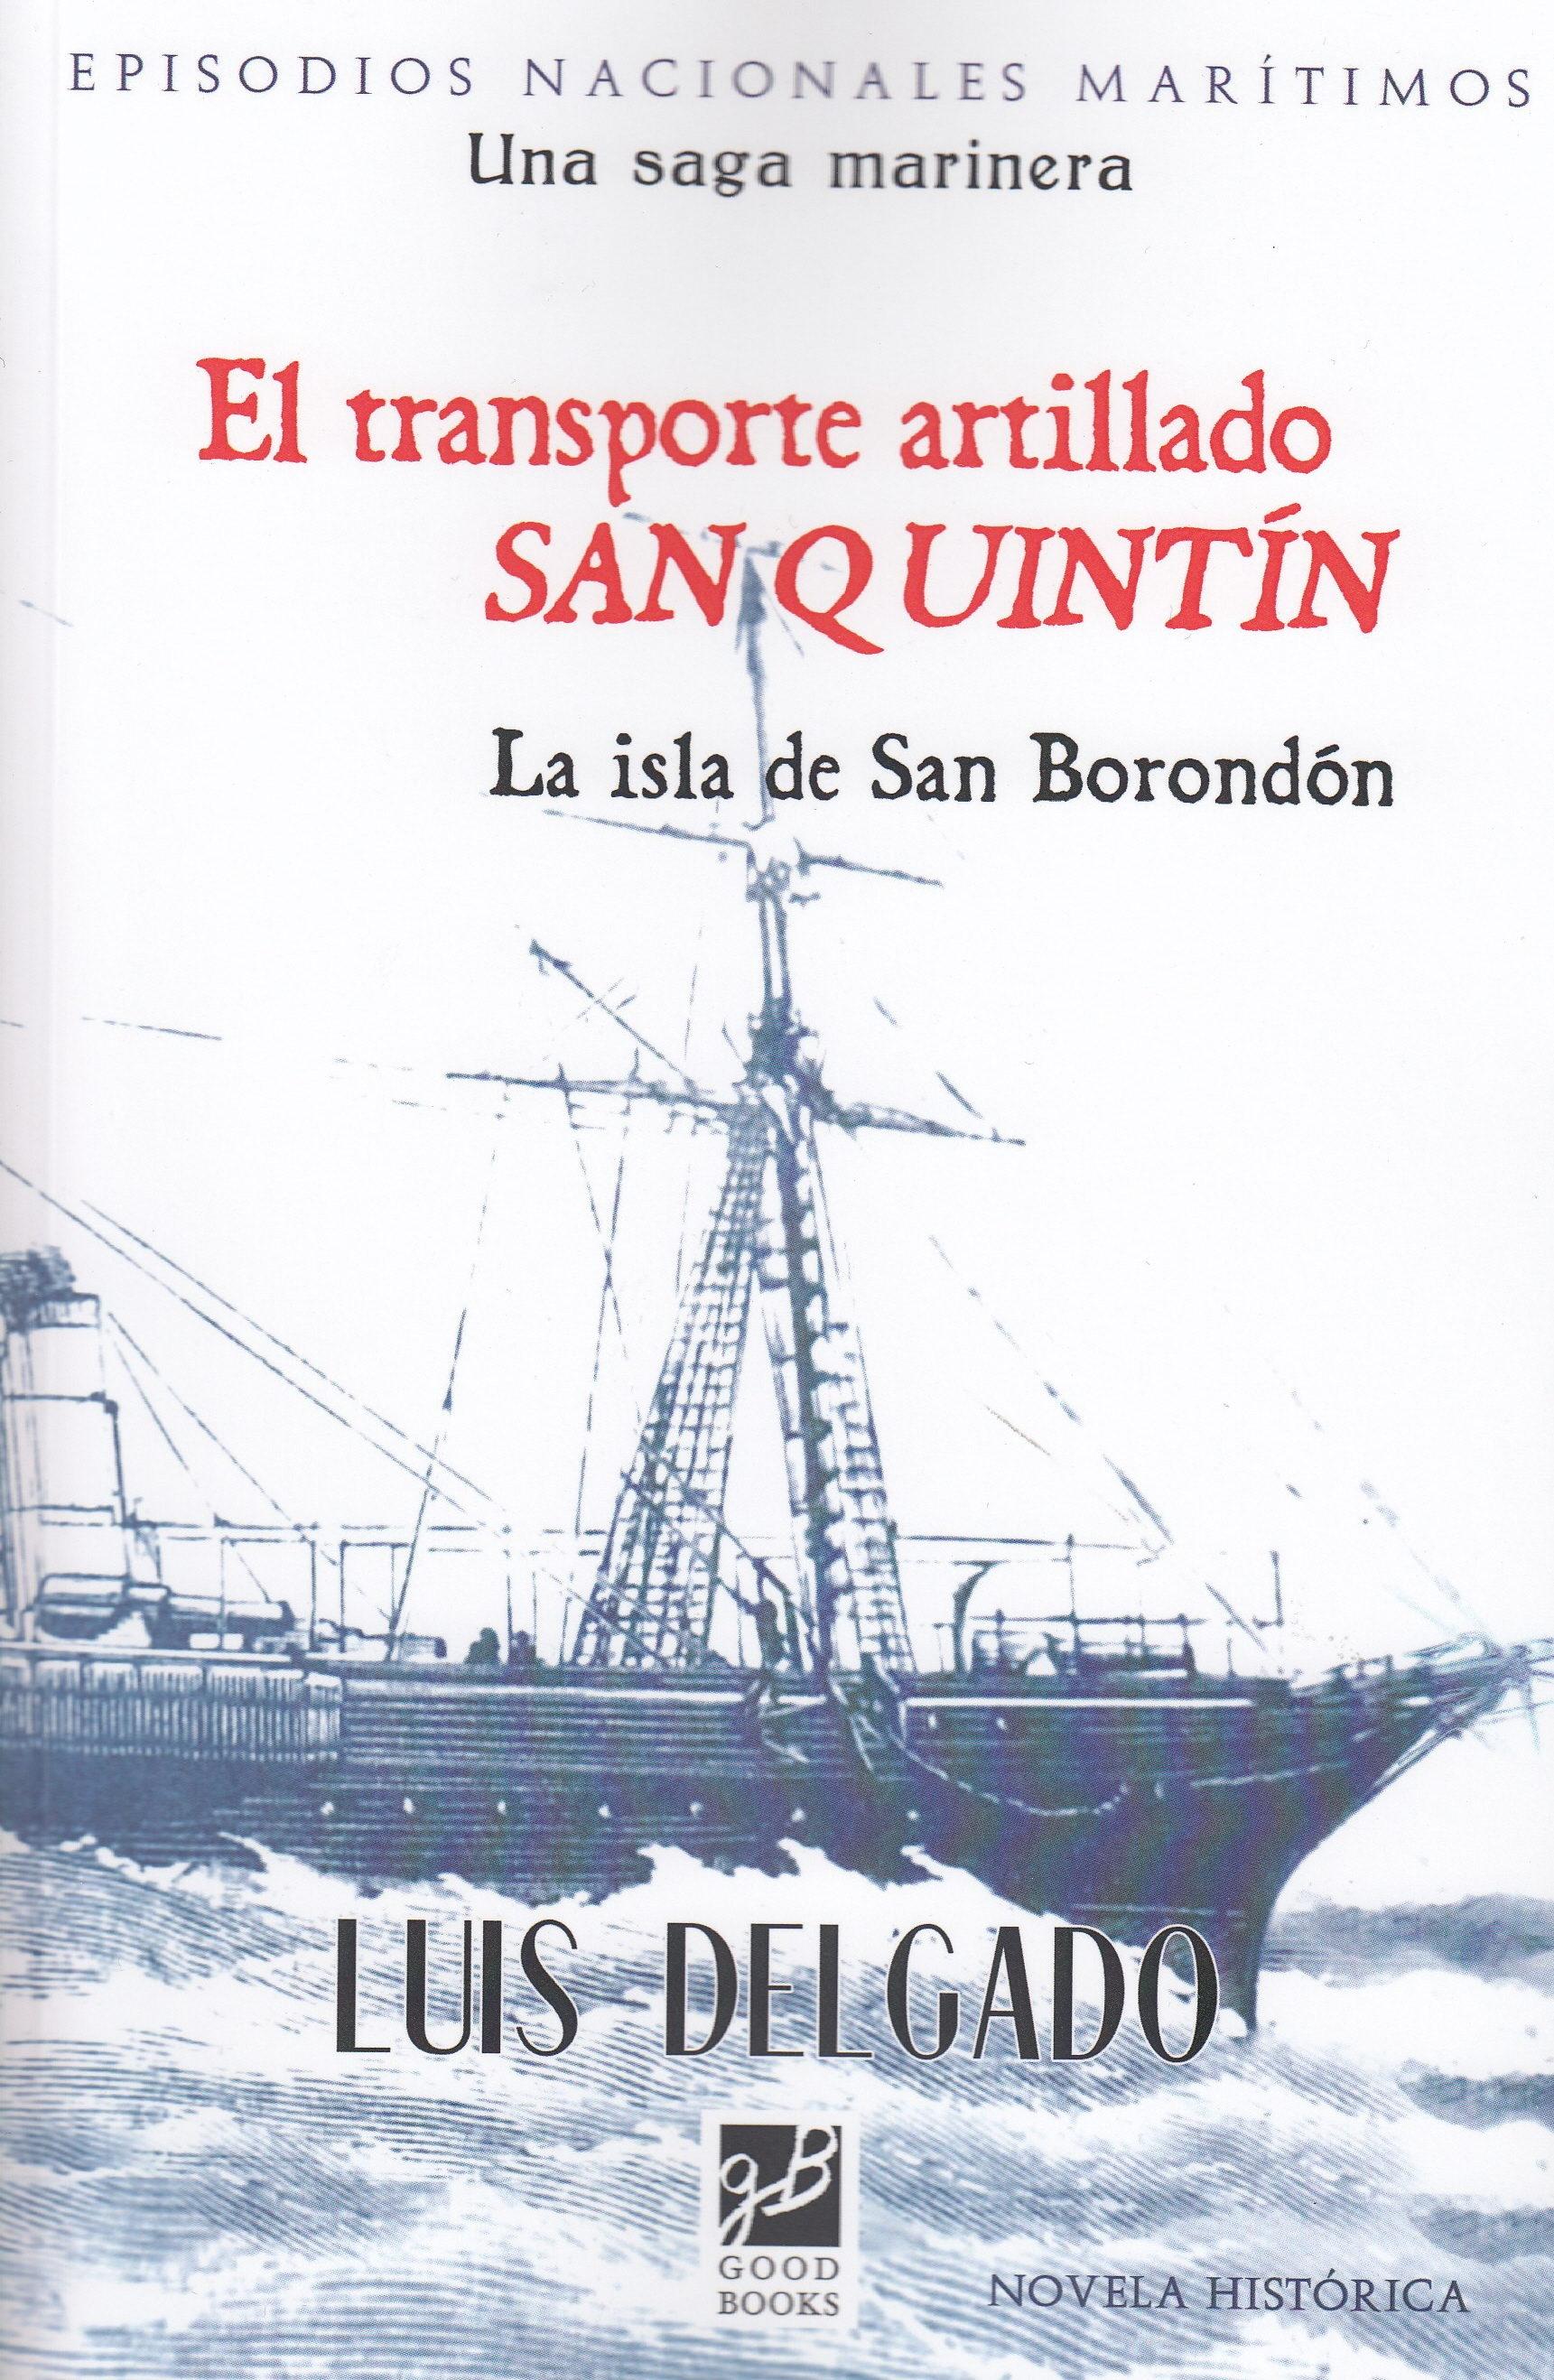 El transporte artillado San Quintin "La isla de San Borondón"